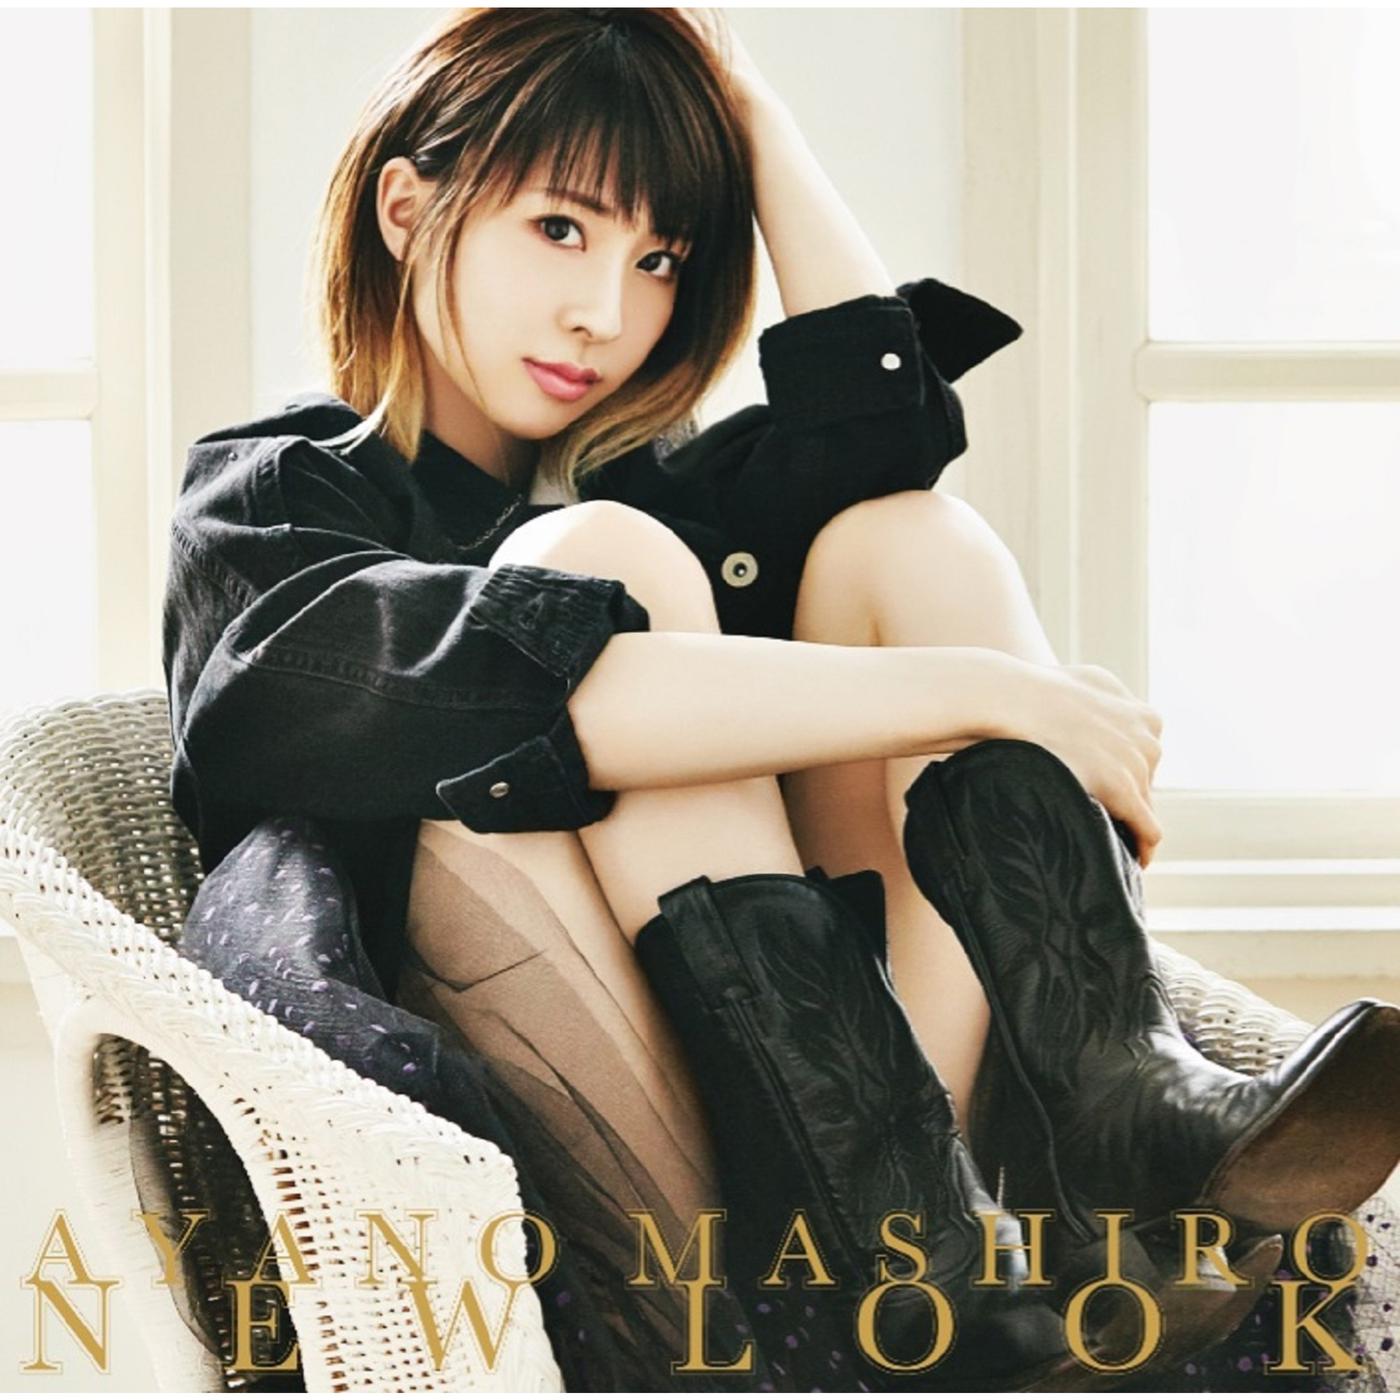 NEWLOOK歌词 歌手綾野ましろ-专辑NEWLOOK-单曲《NEWLOOK》LRC歌词下载